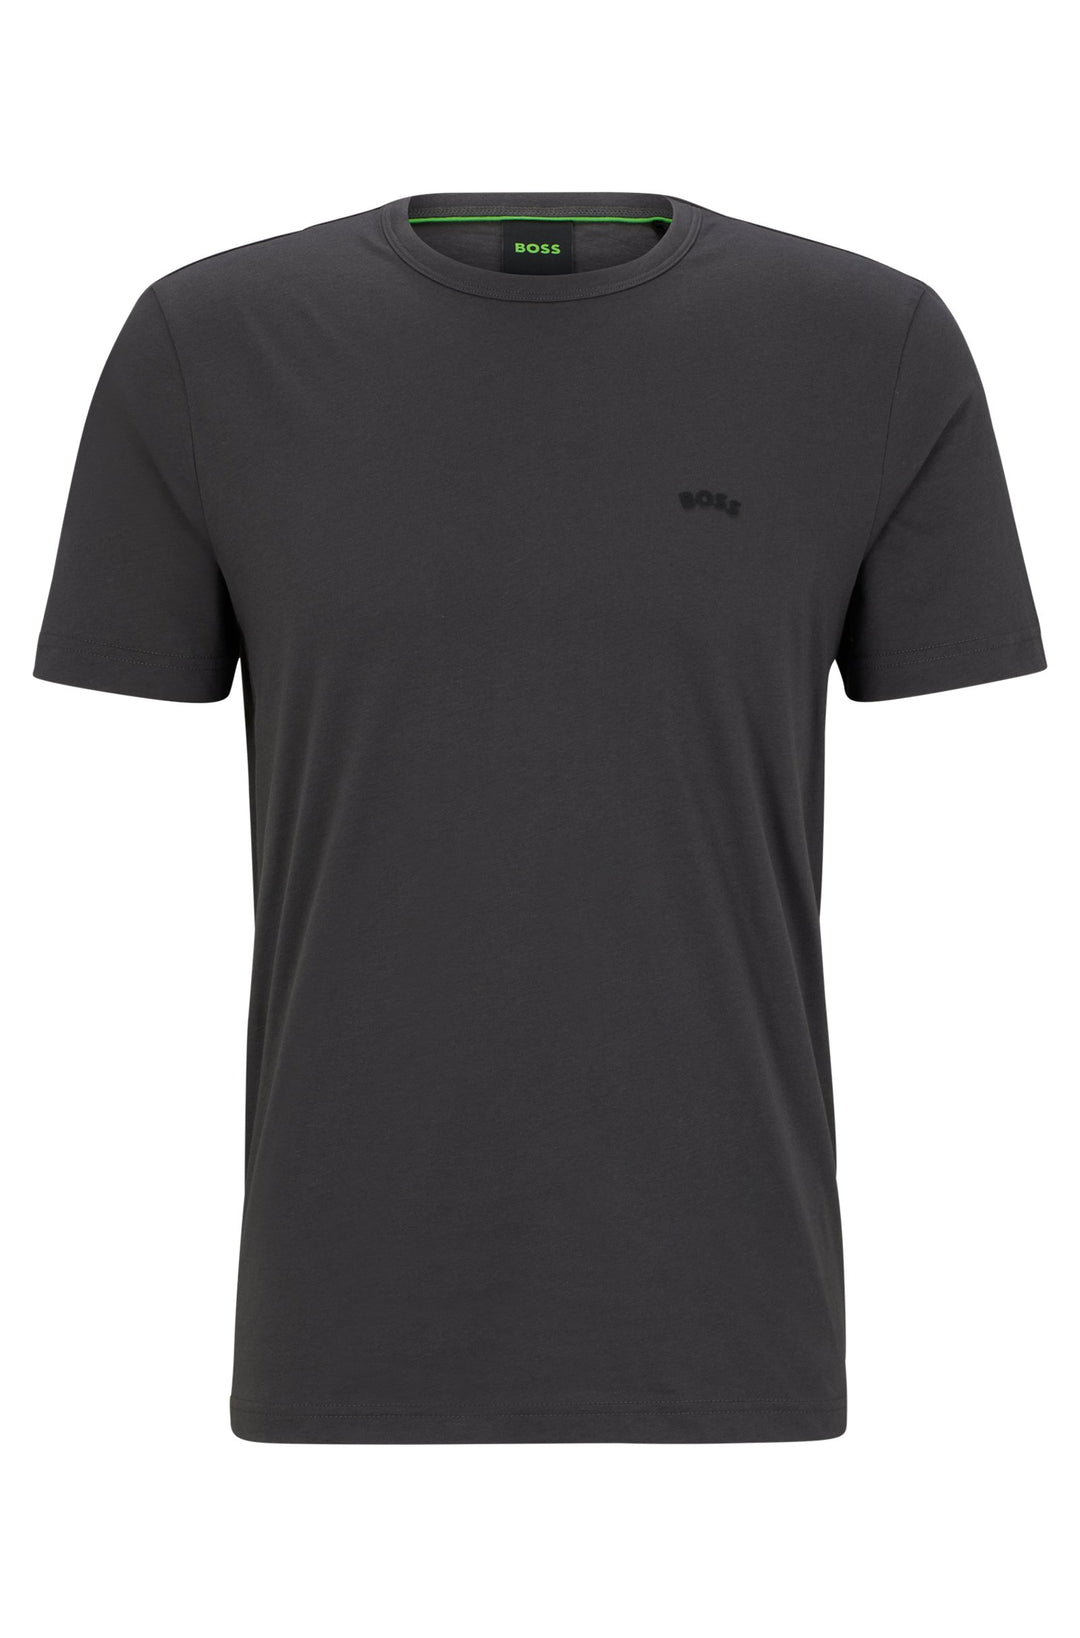 Hugo Boss Curved Logo T-Shirt Charcoal